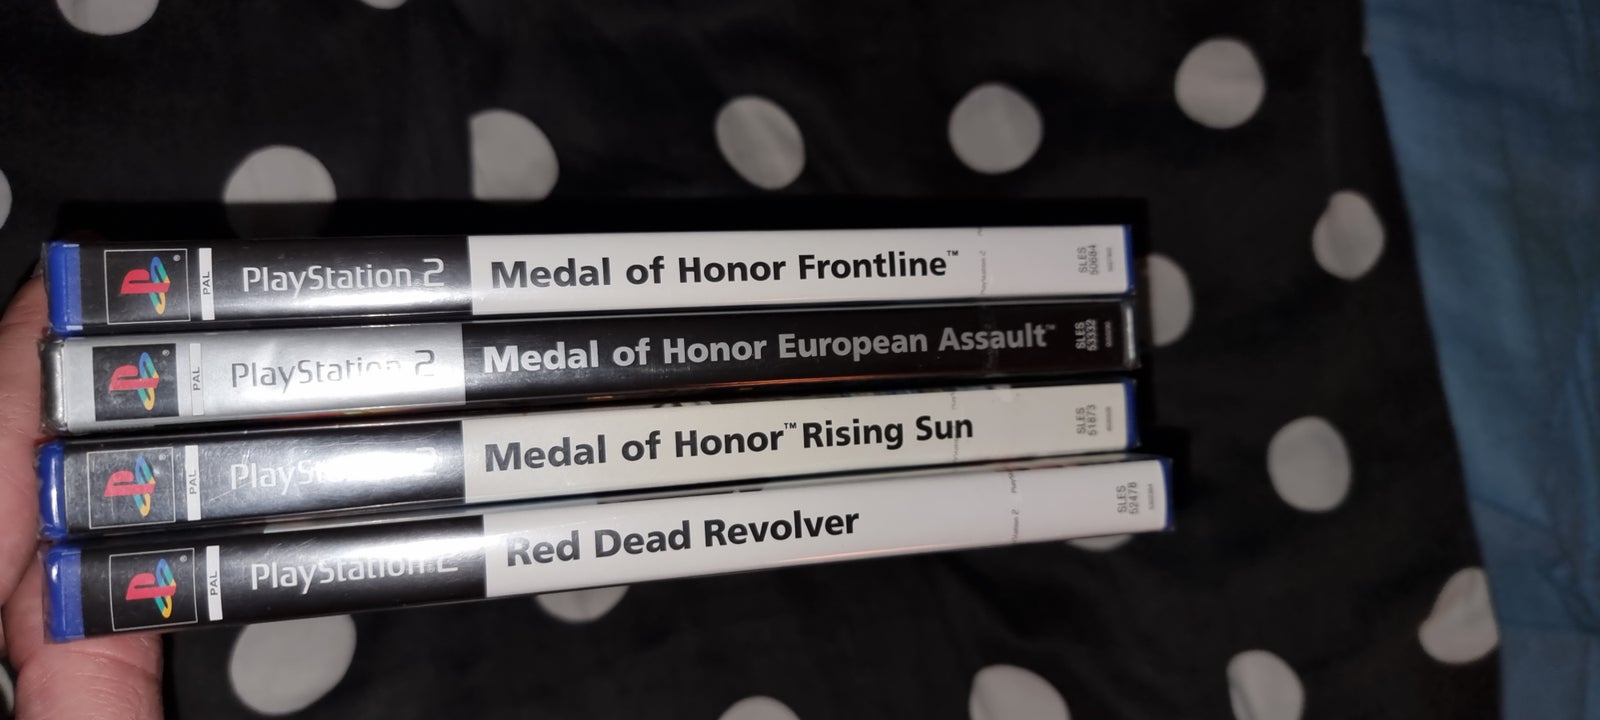 Red Dead Revolver & Medal of honor I Folie, PS2